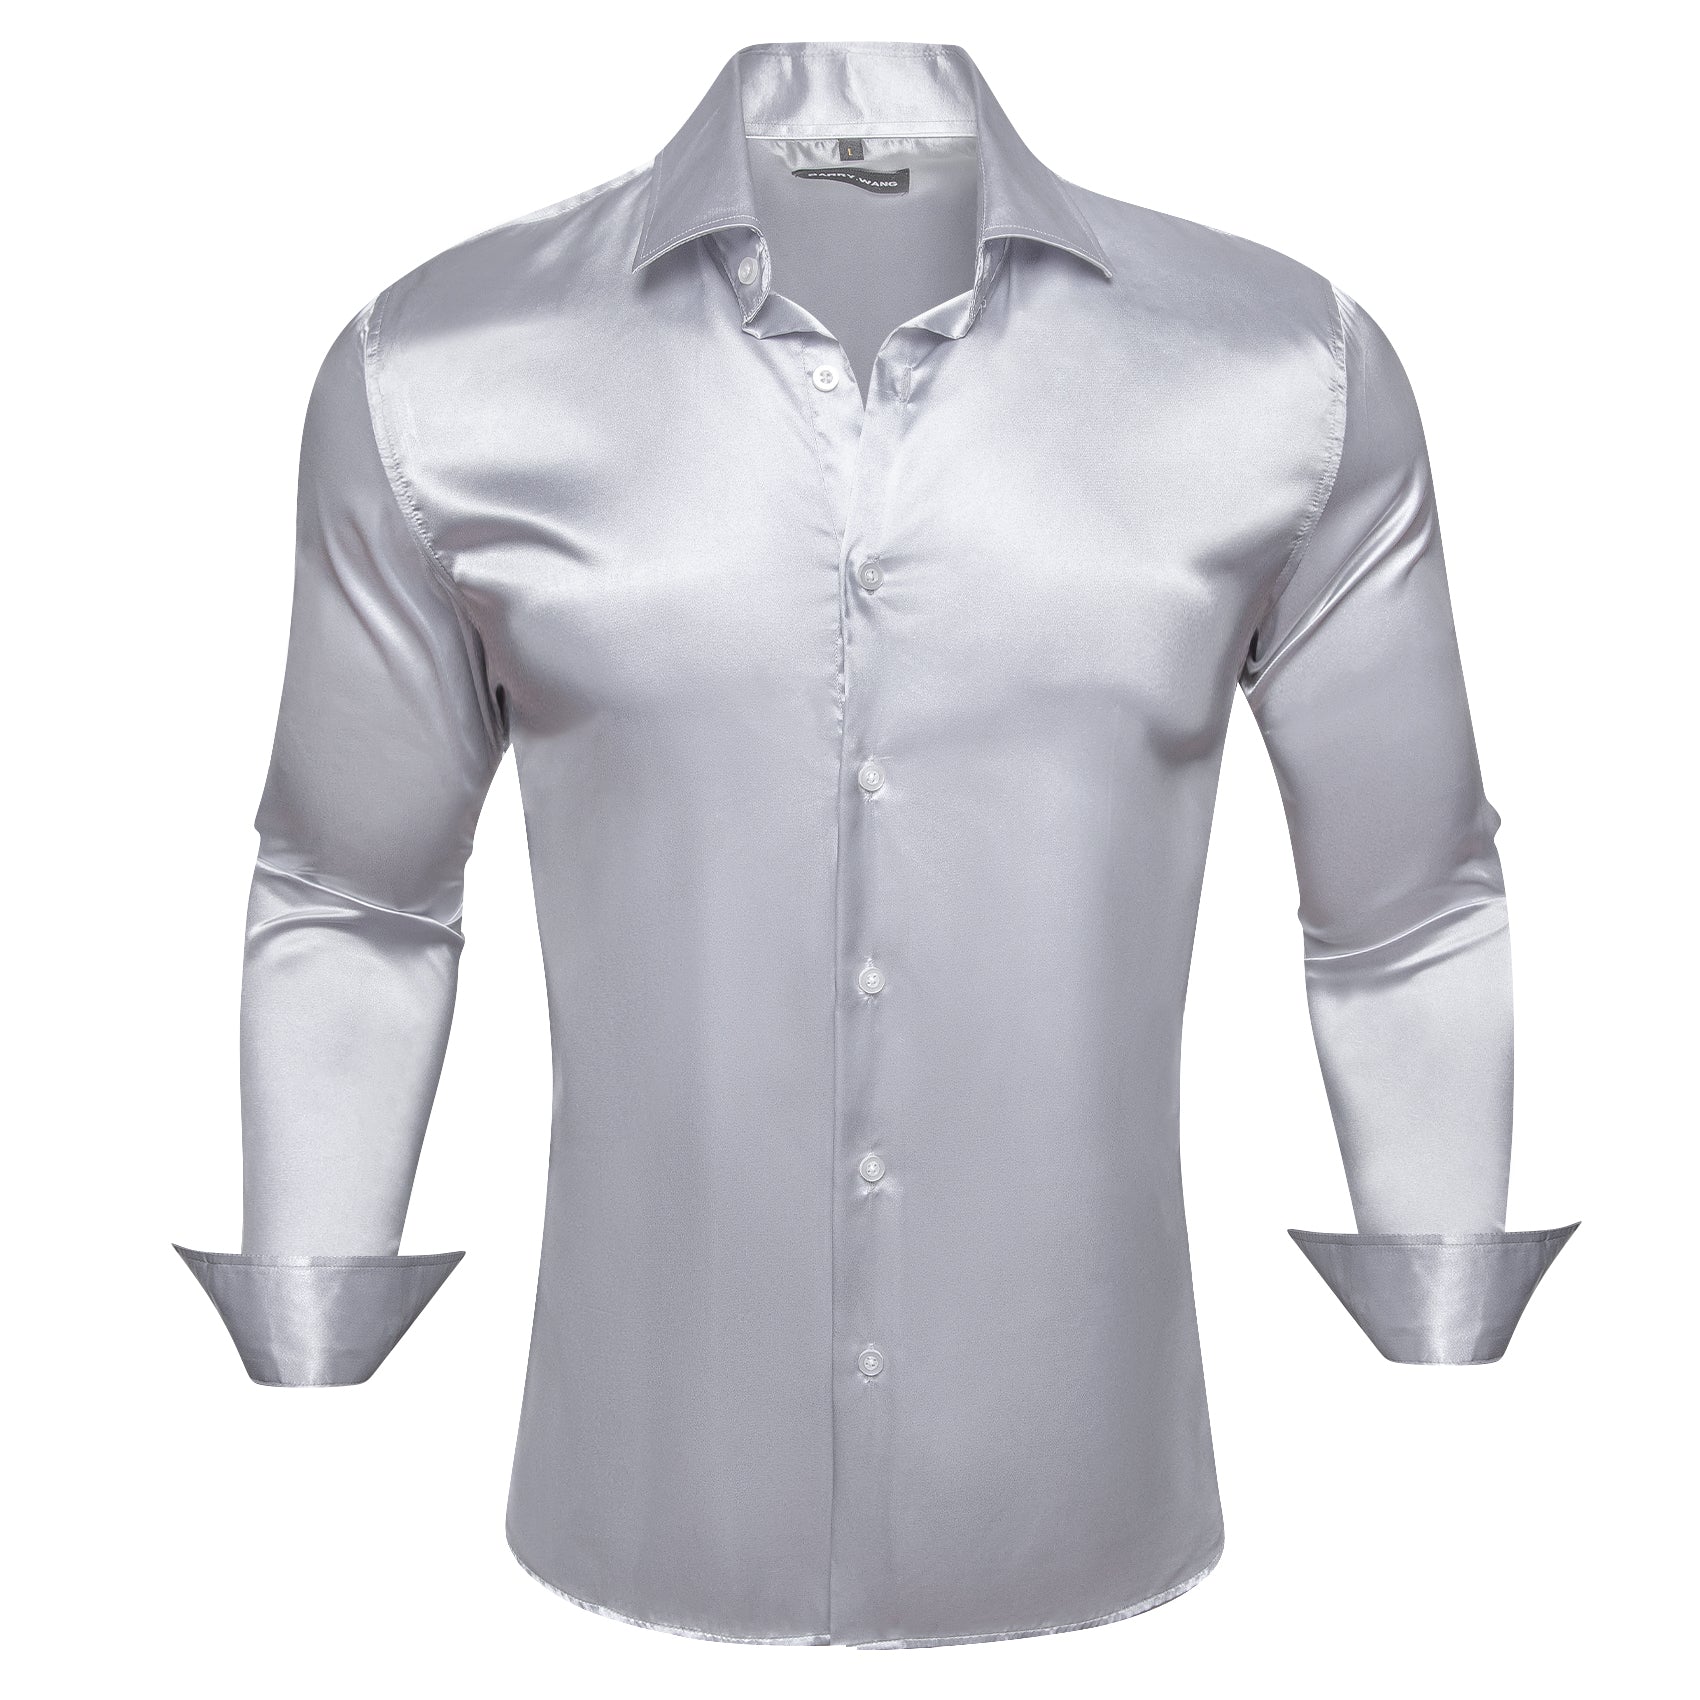 Barry.wang Button Down Shirt Silver Solid Silk Men's Long Sleeve Shirt